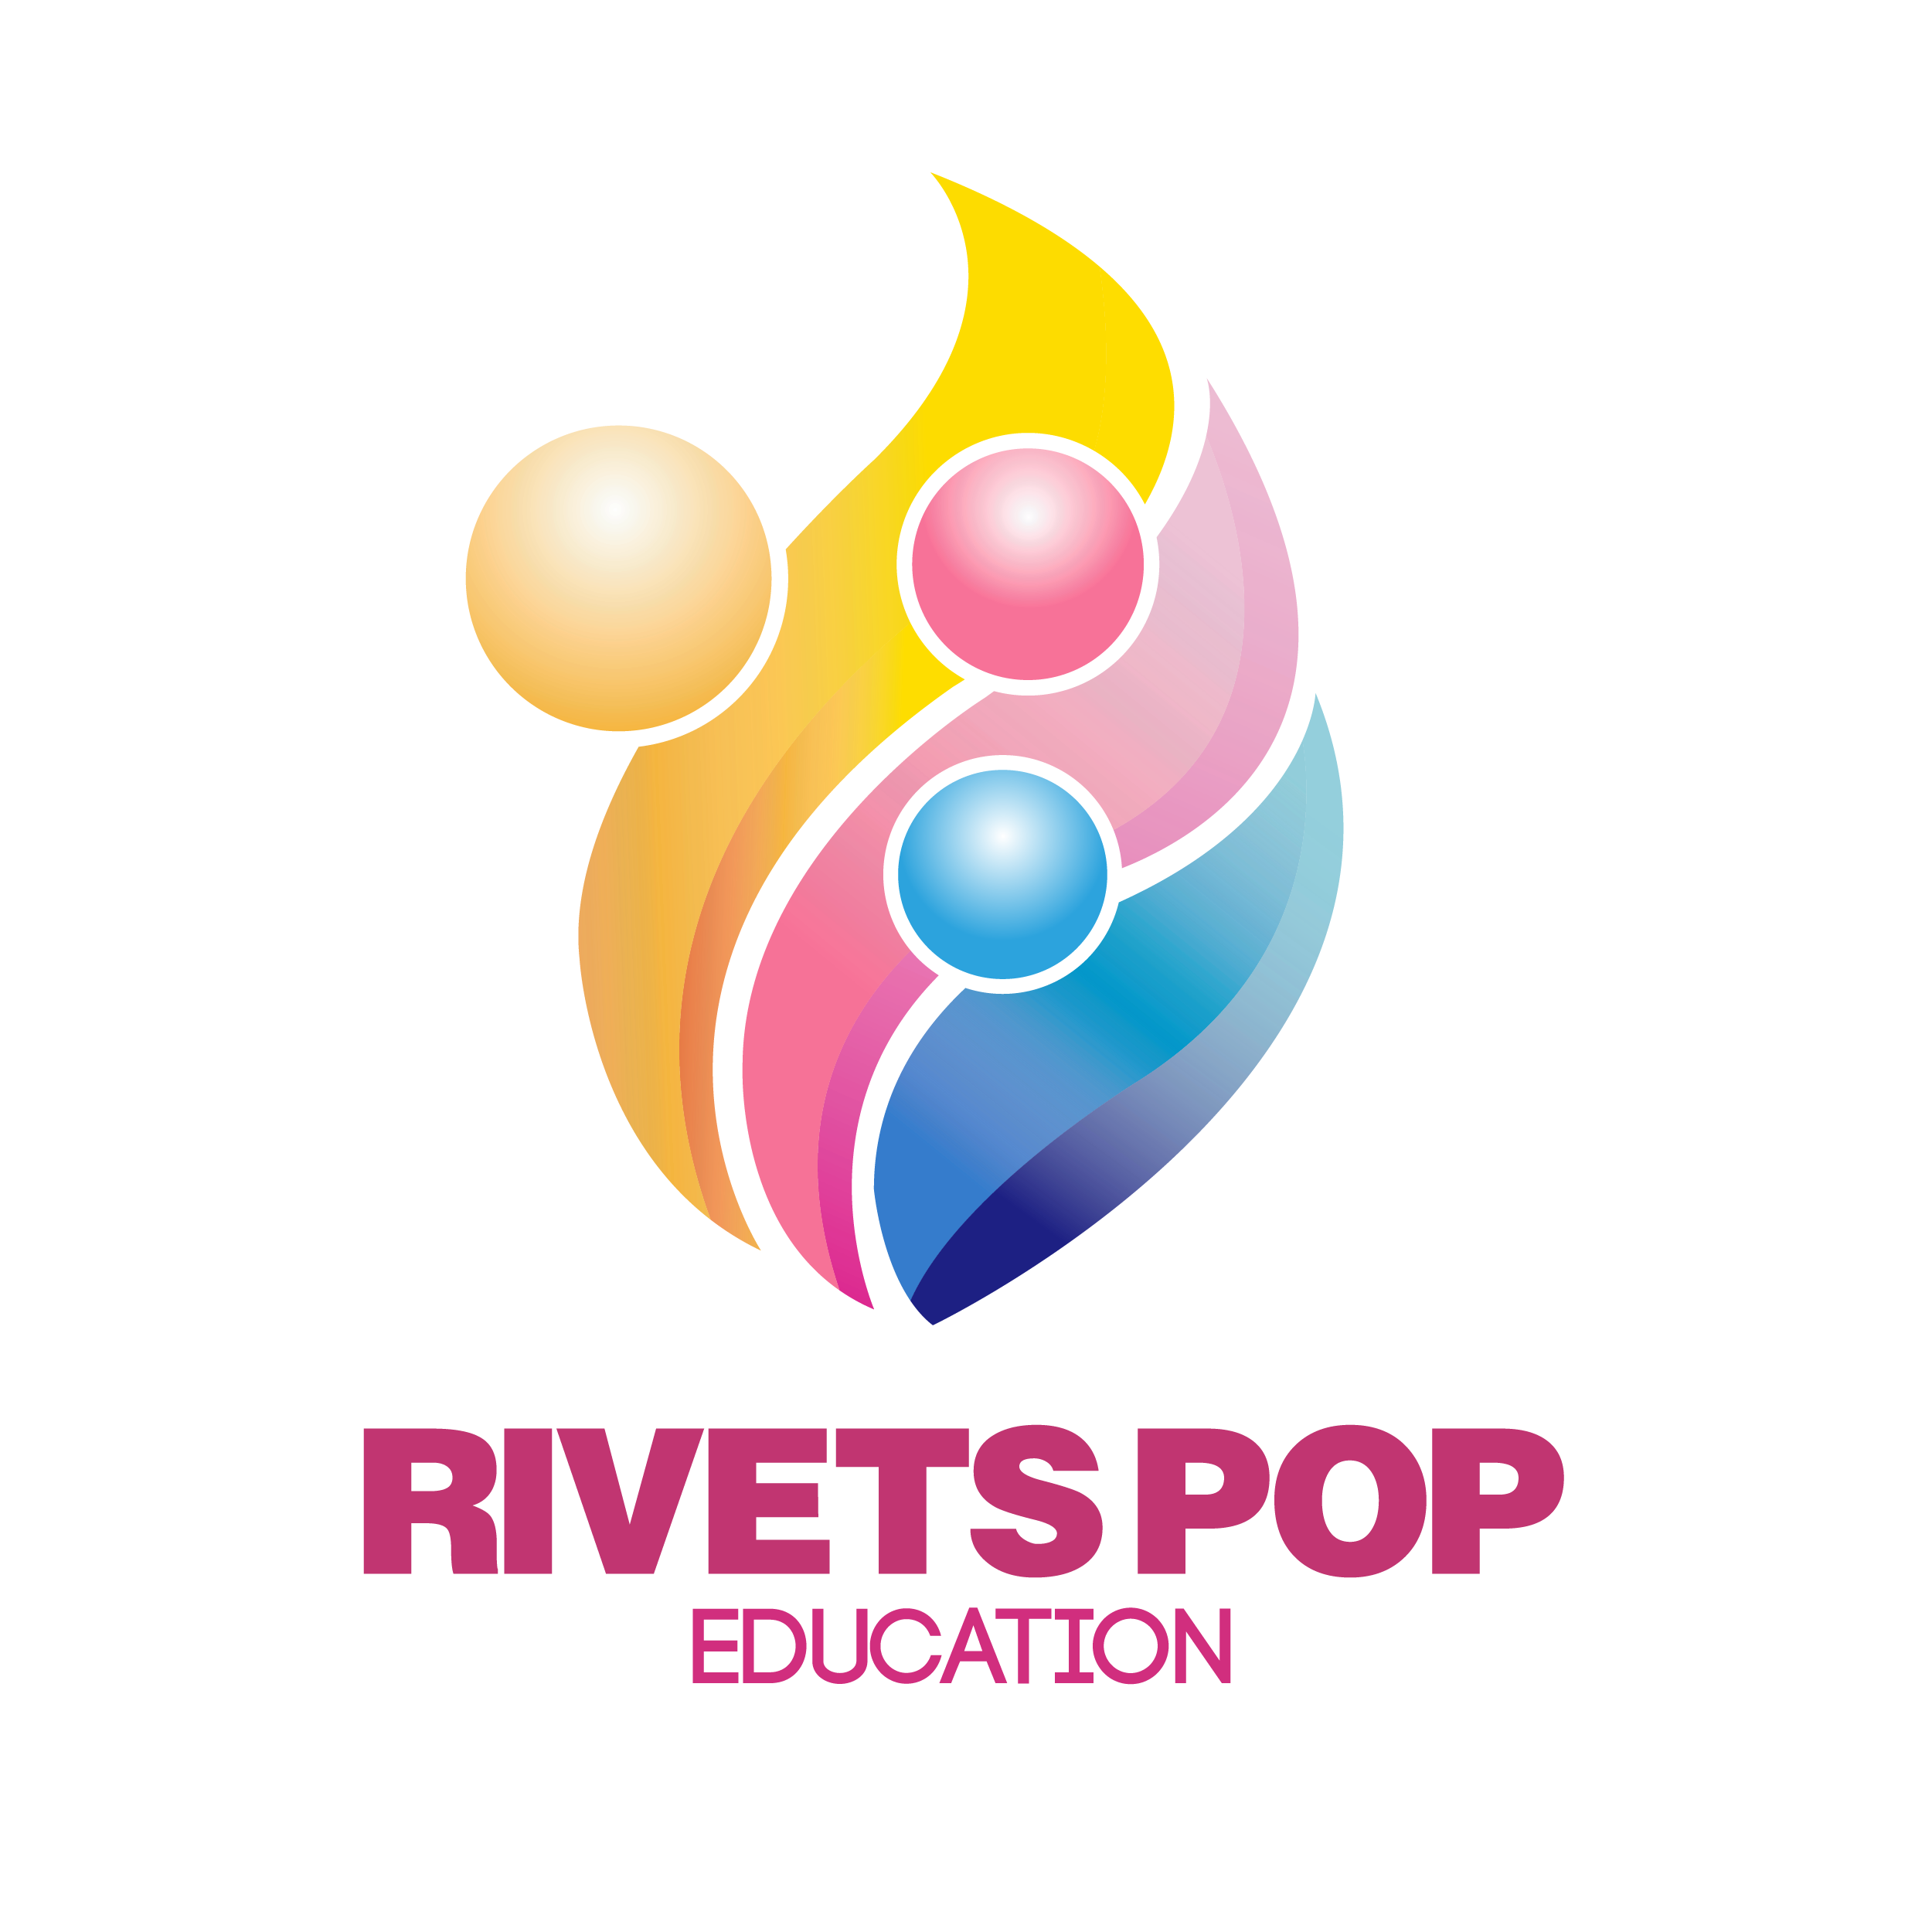 Rivets Pop (リベッツポップ) Education